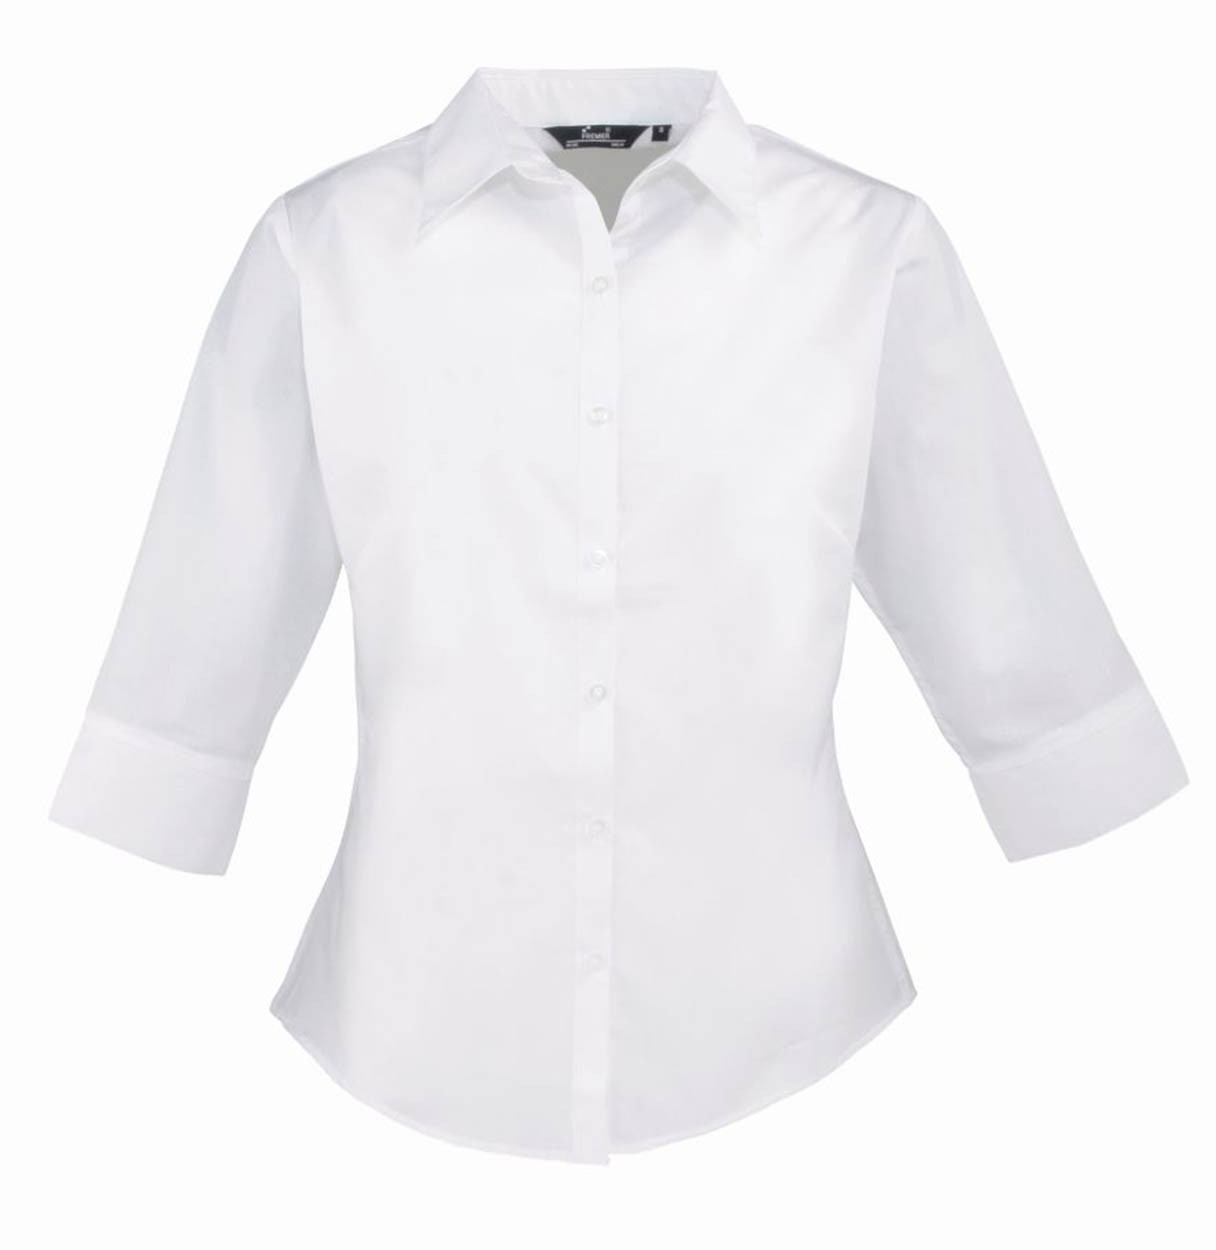 3/4 Length Short Sleeve Women's Shirts